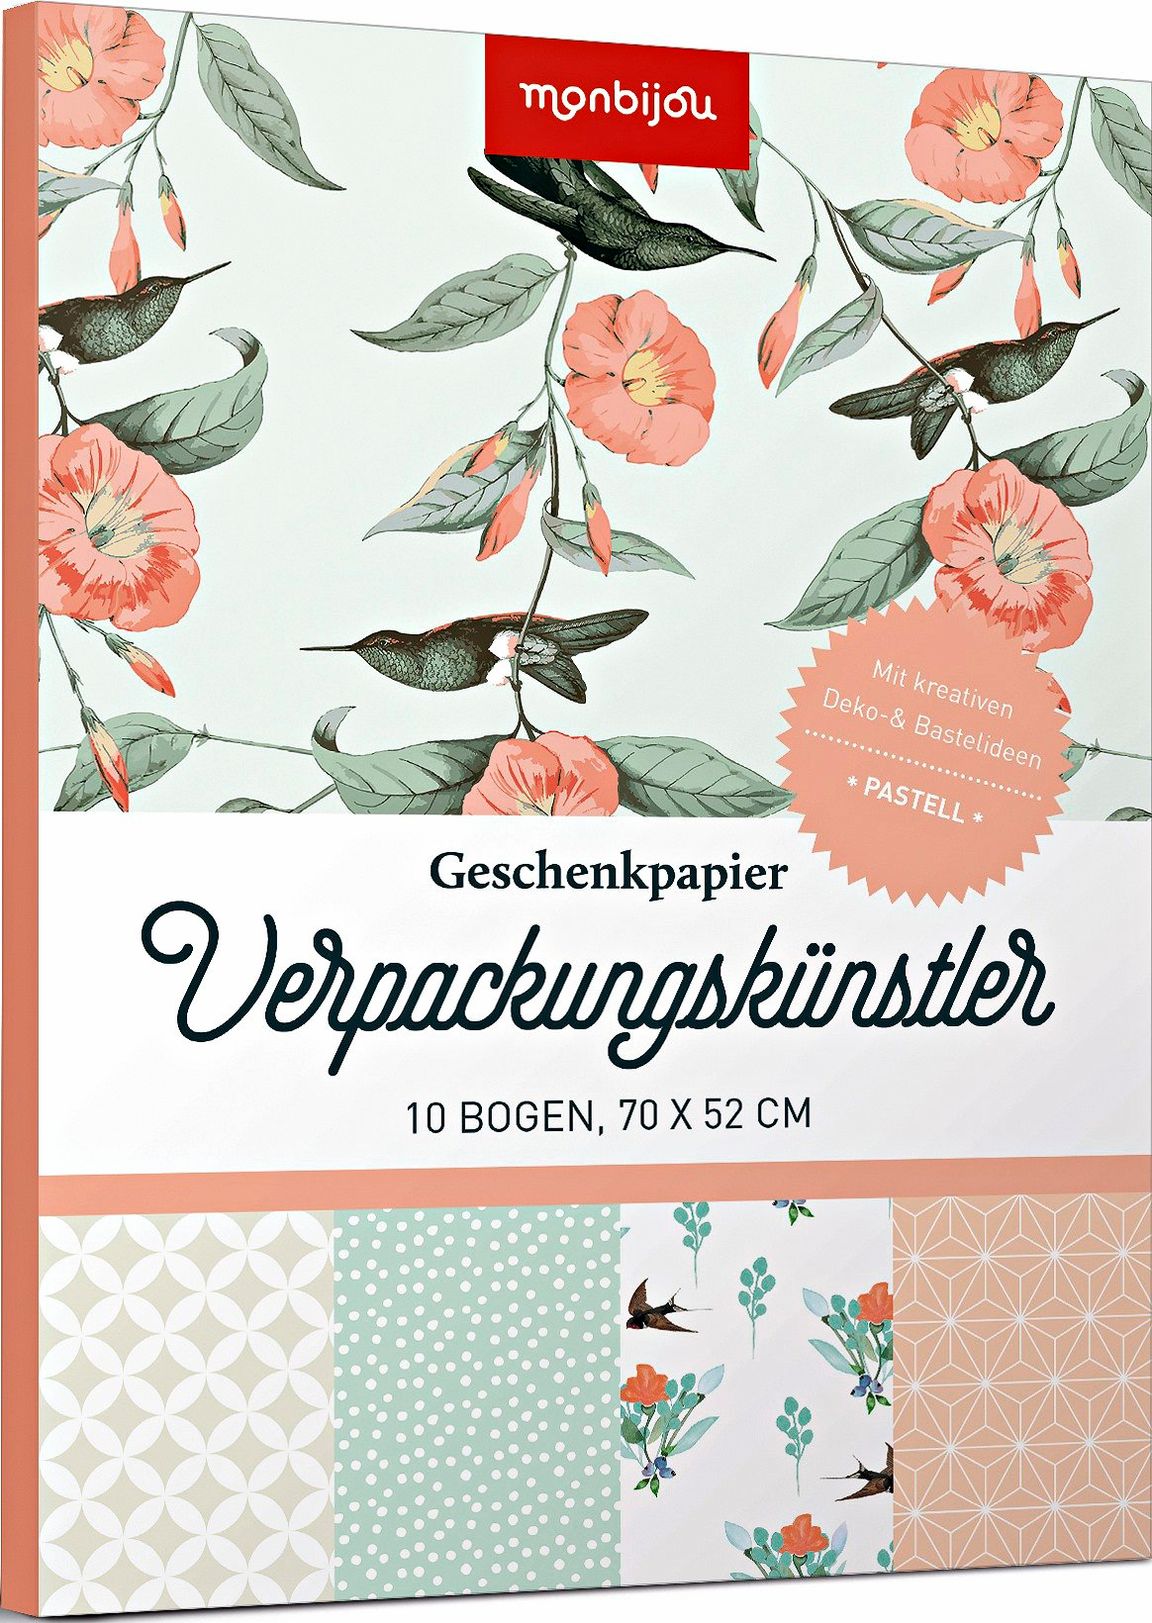 Verpackungskünstler Geschenkpapier - Pastell | Weltbild.de